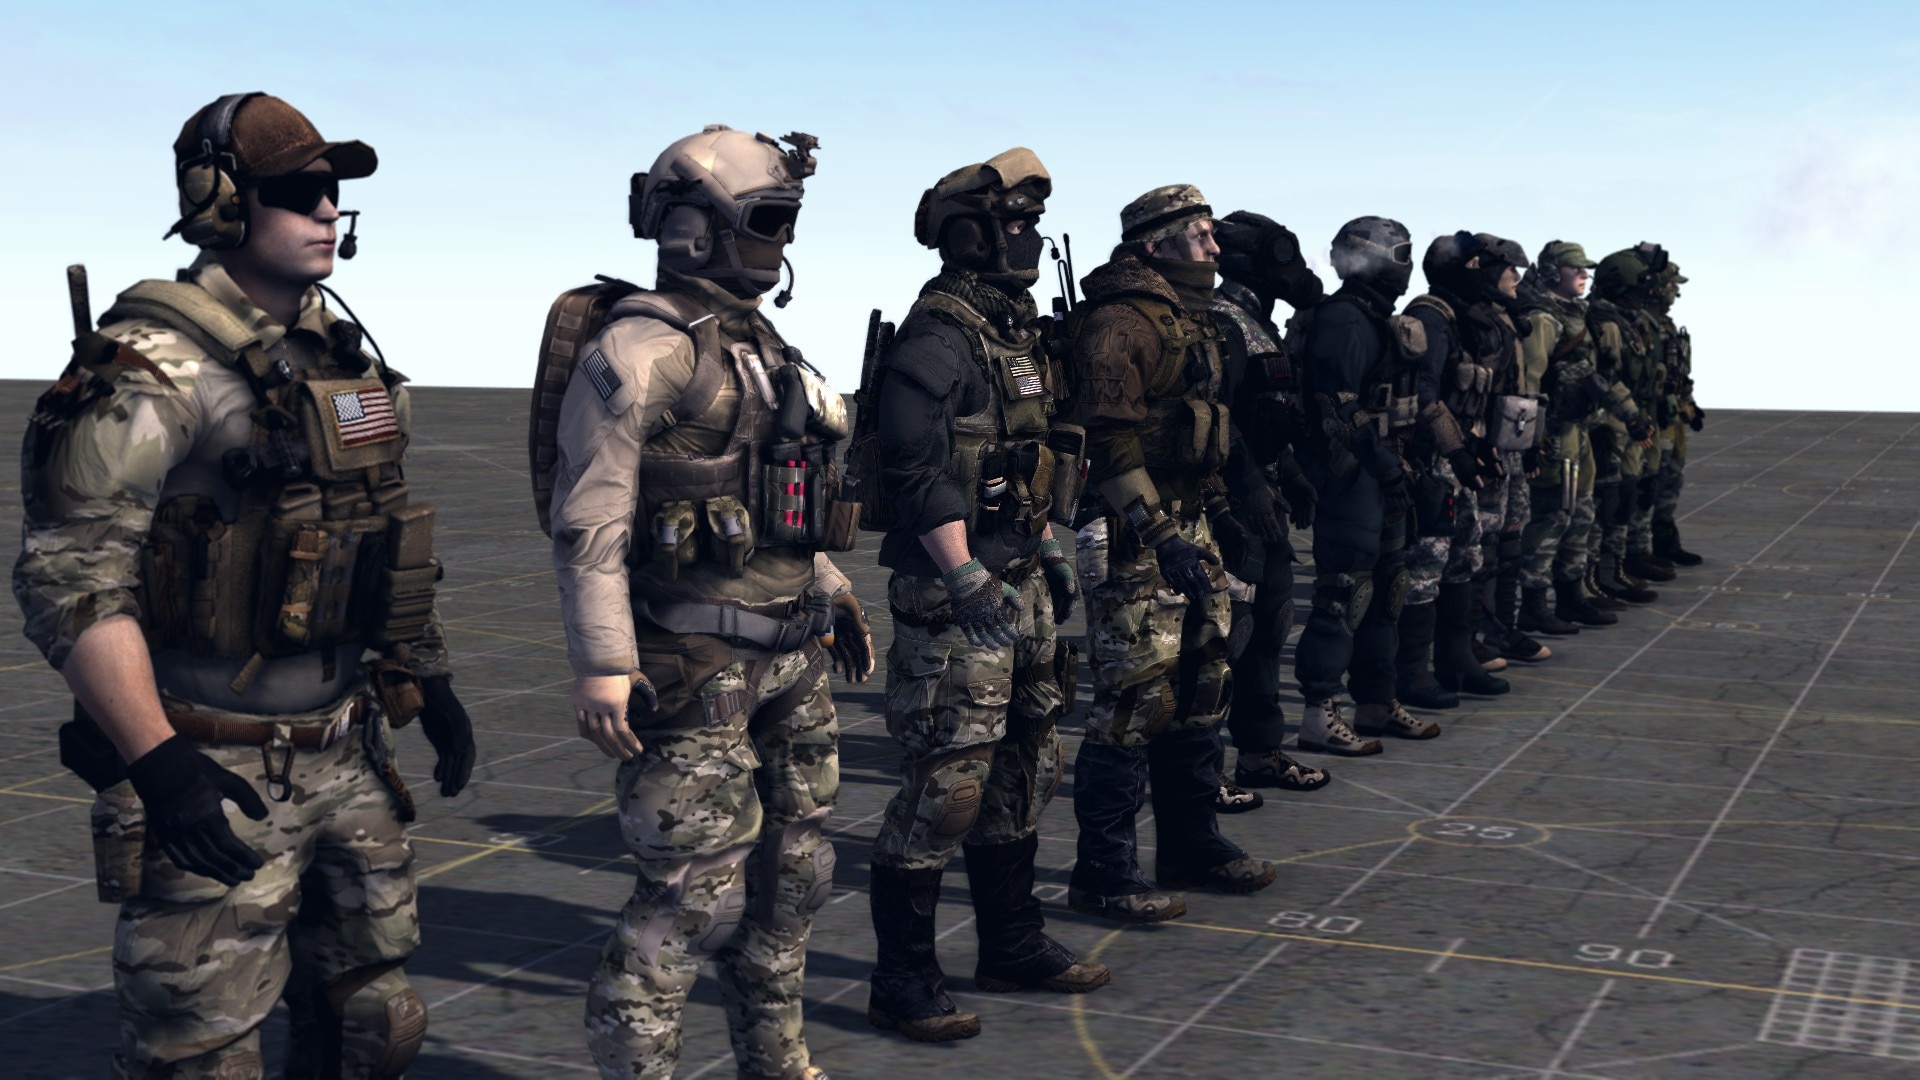 Steam Workshop::Battlefield 4 skins mod